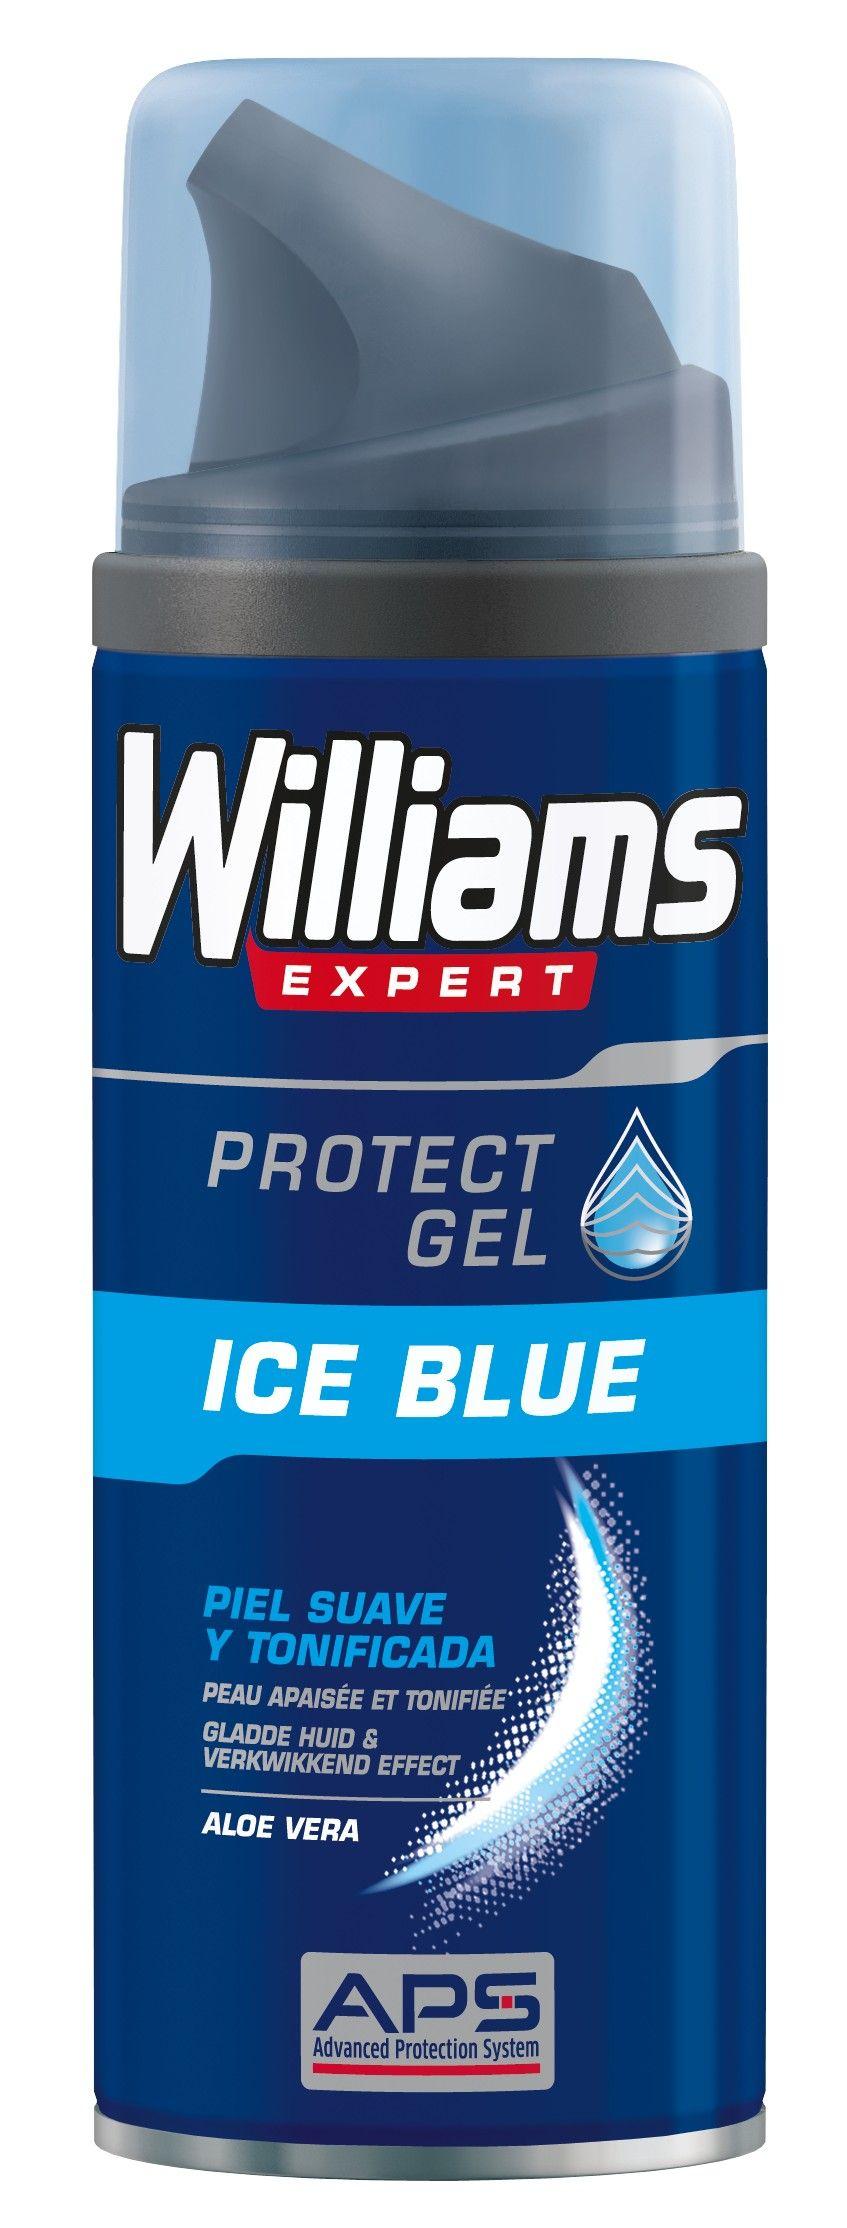 Williams Gel de Afeitar Ice Blue 200ml 